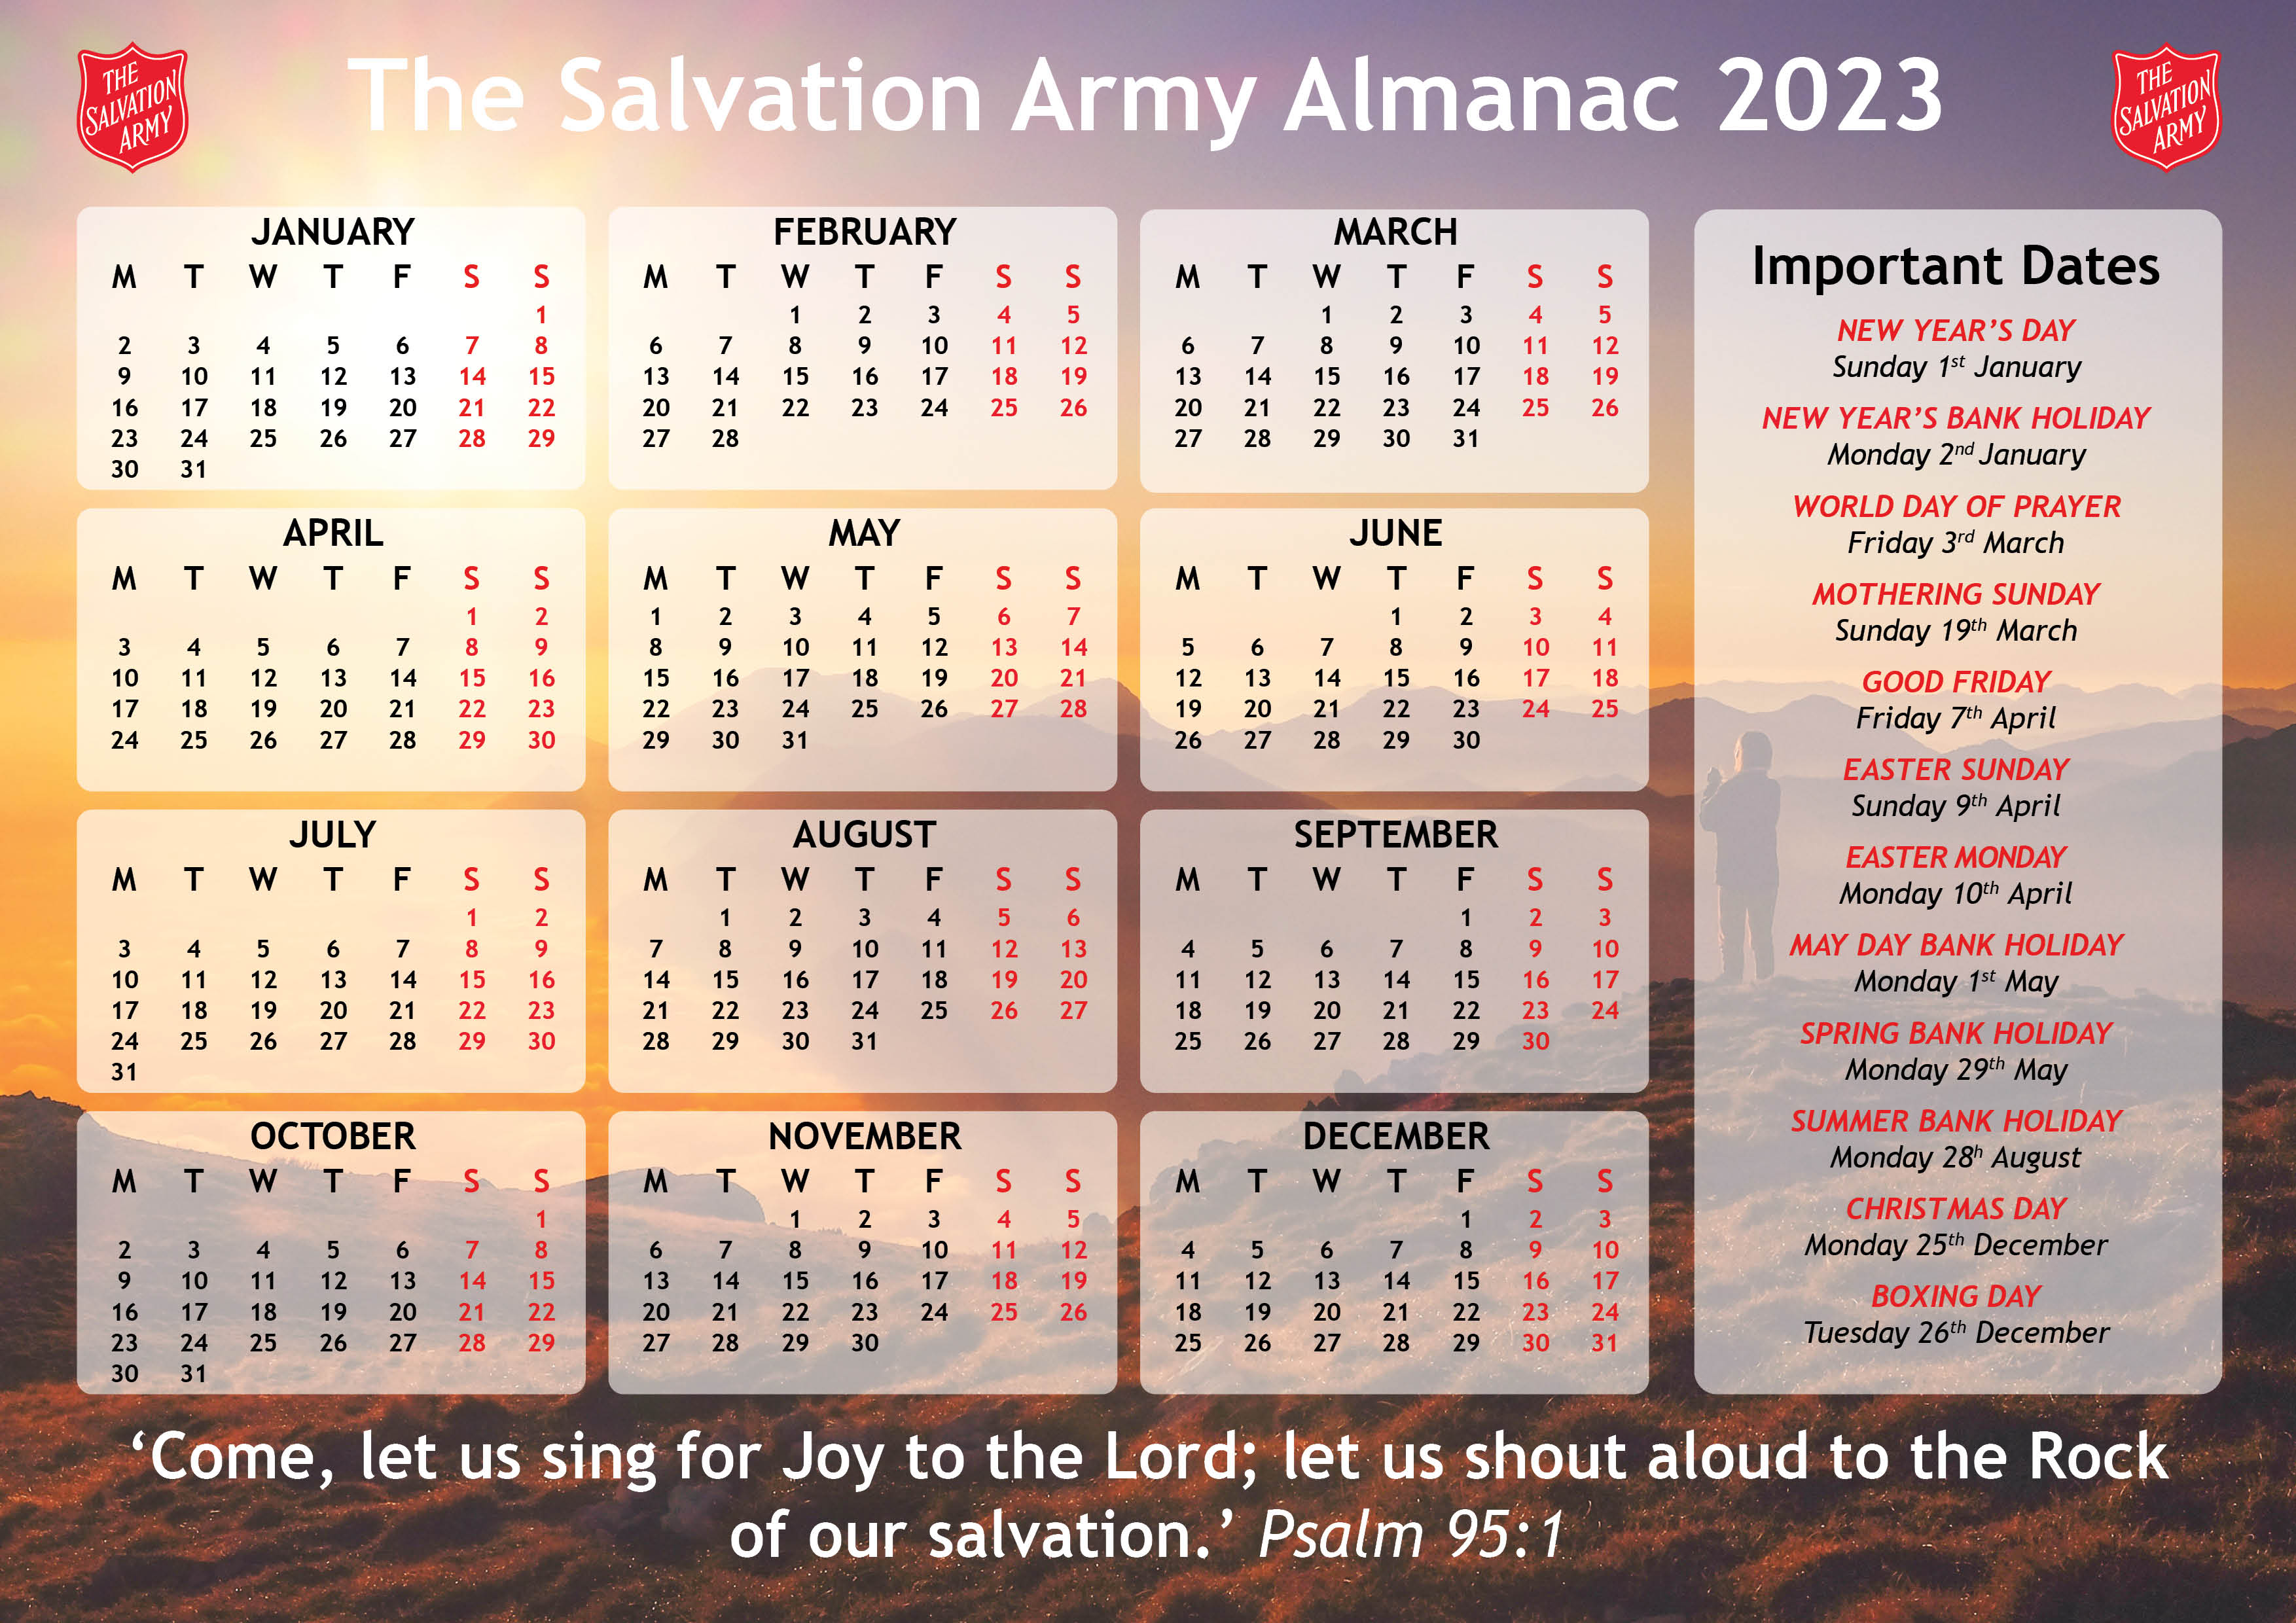 The Salvation Army Almanac 2023